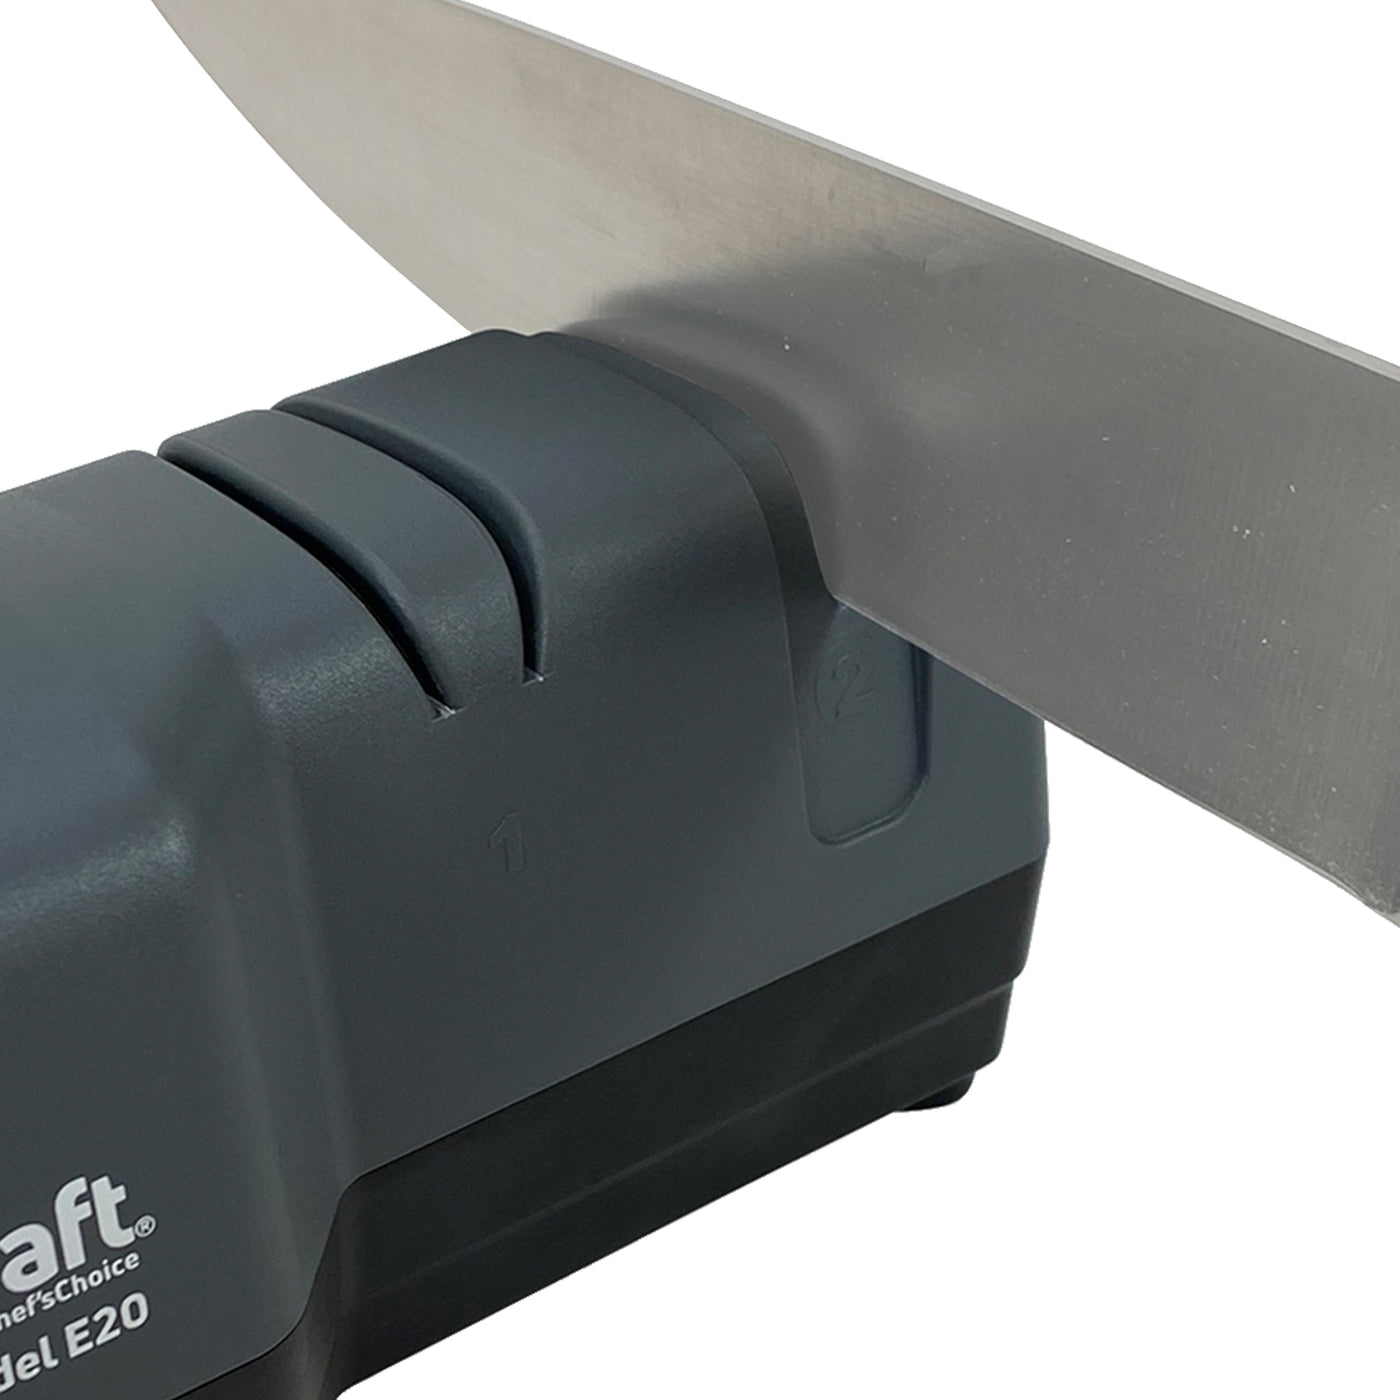 EdgeCraft E442 2-Stage Manual Knife Sharpener